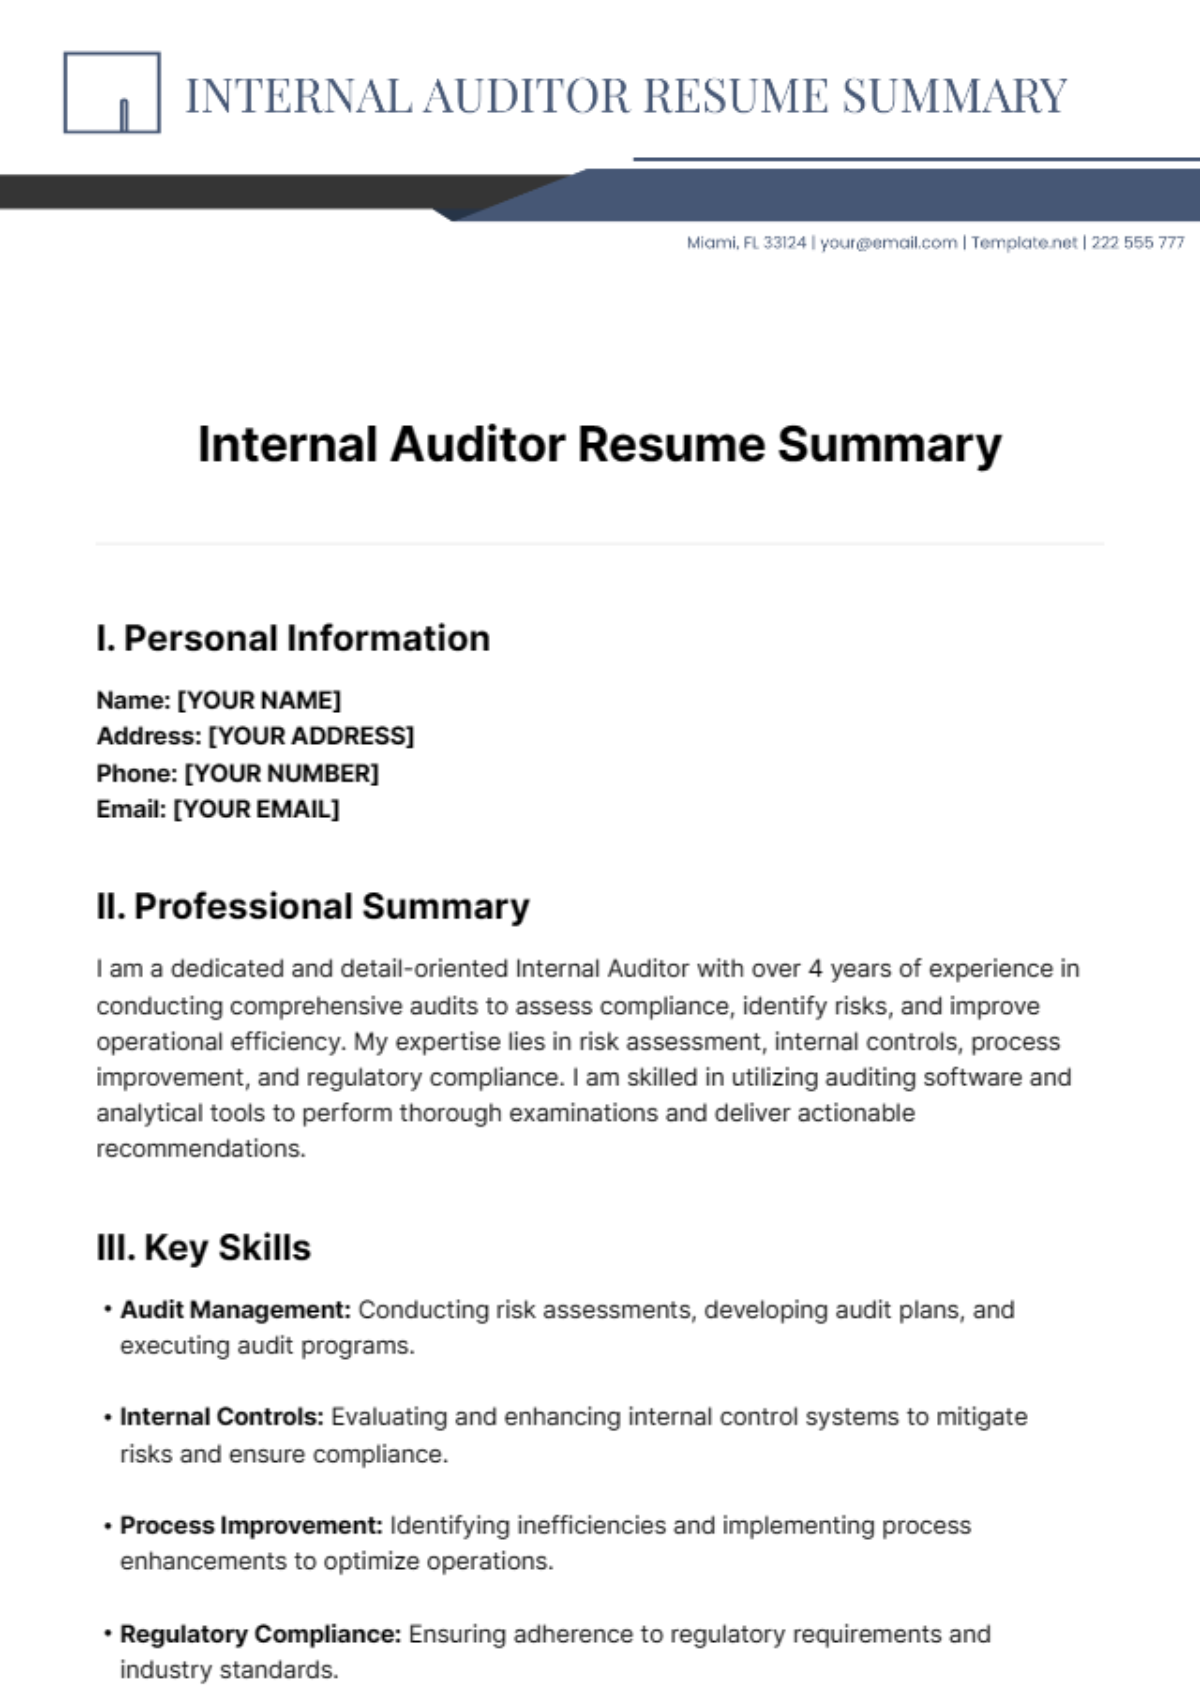 Free Internal Auditor Resume Summary Template